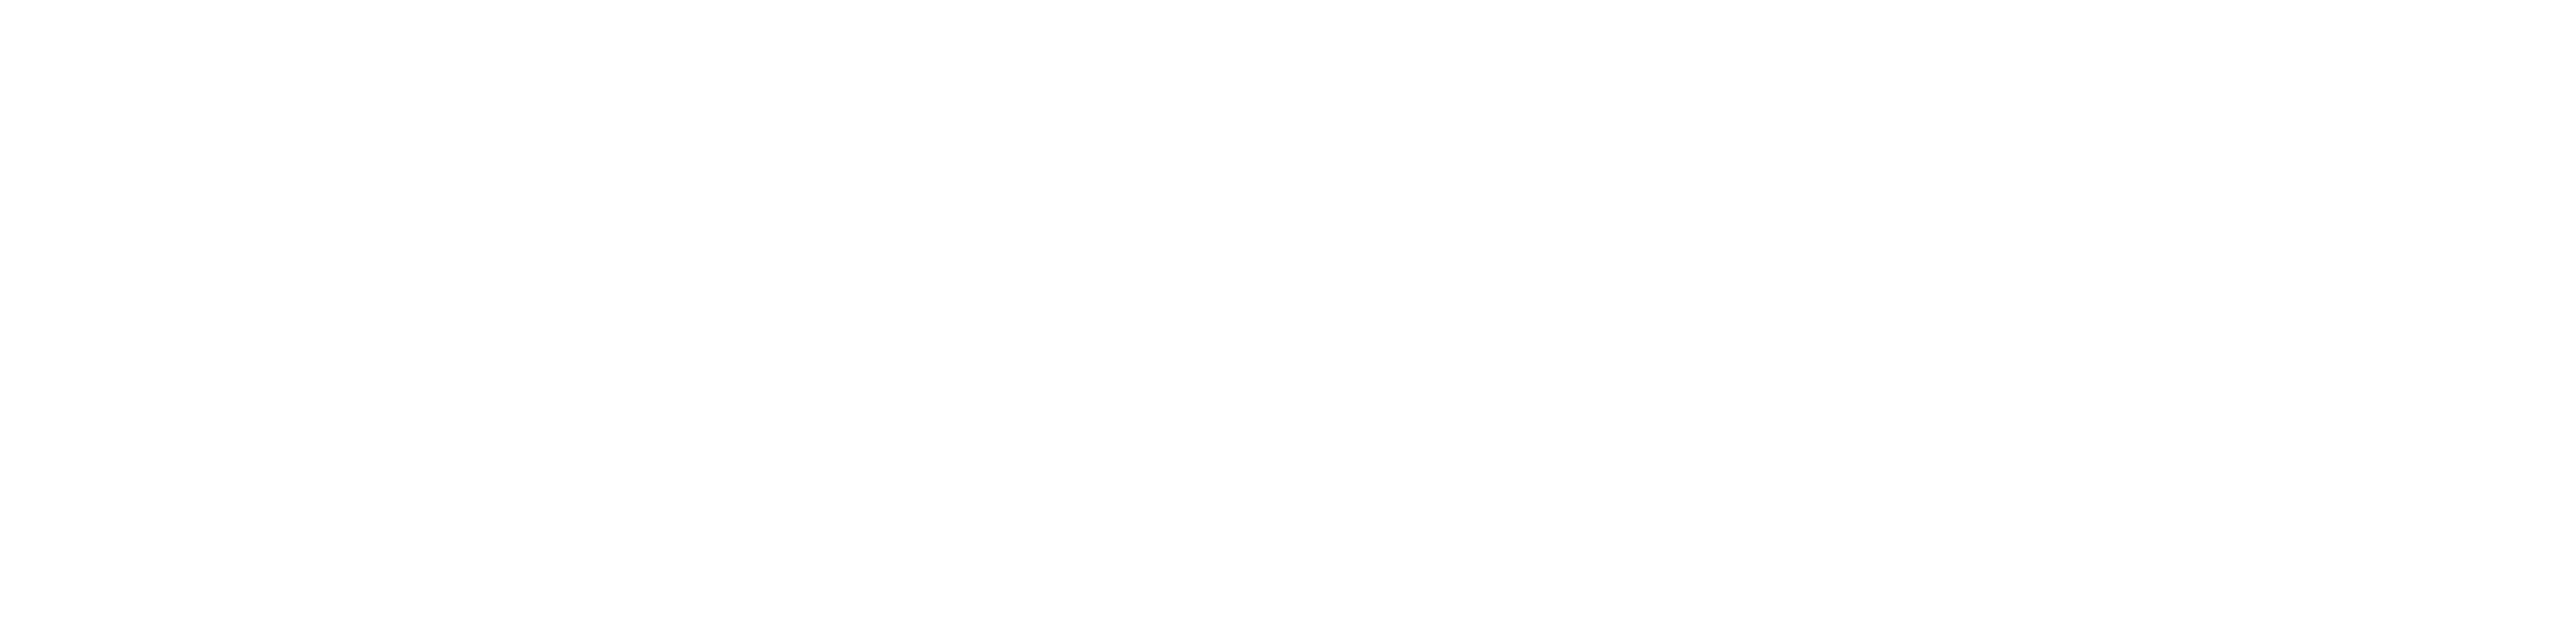 Kramer Trial Lawyers Logo